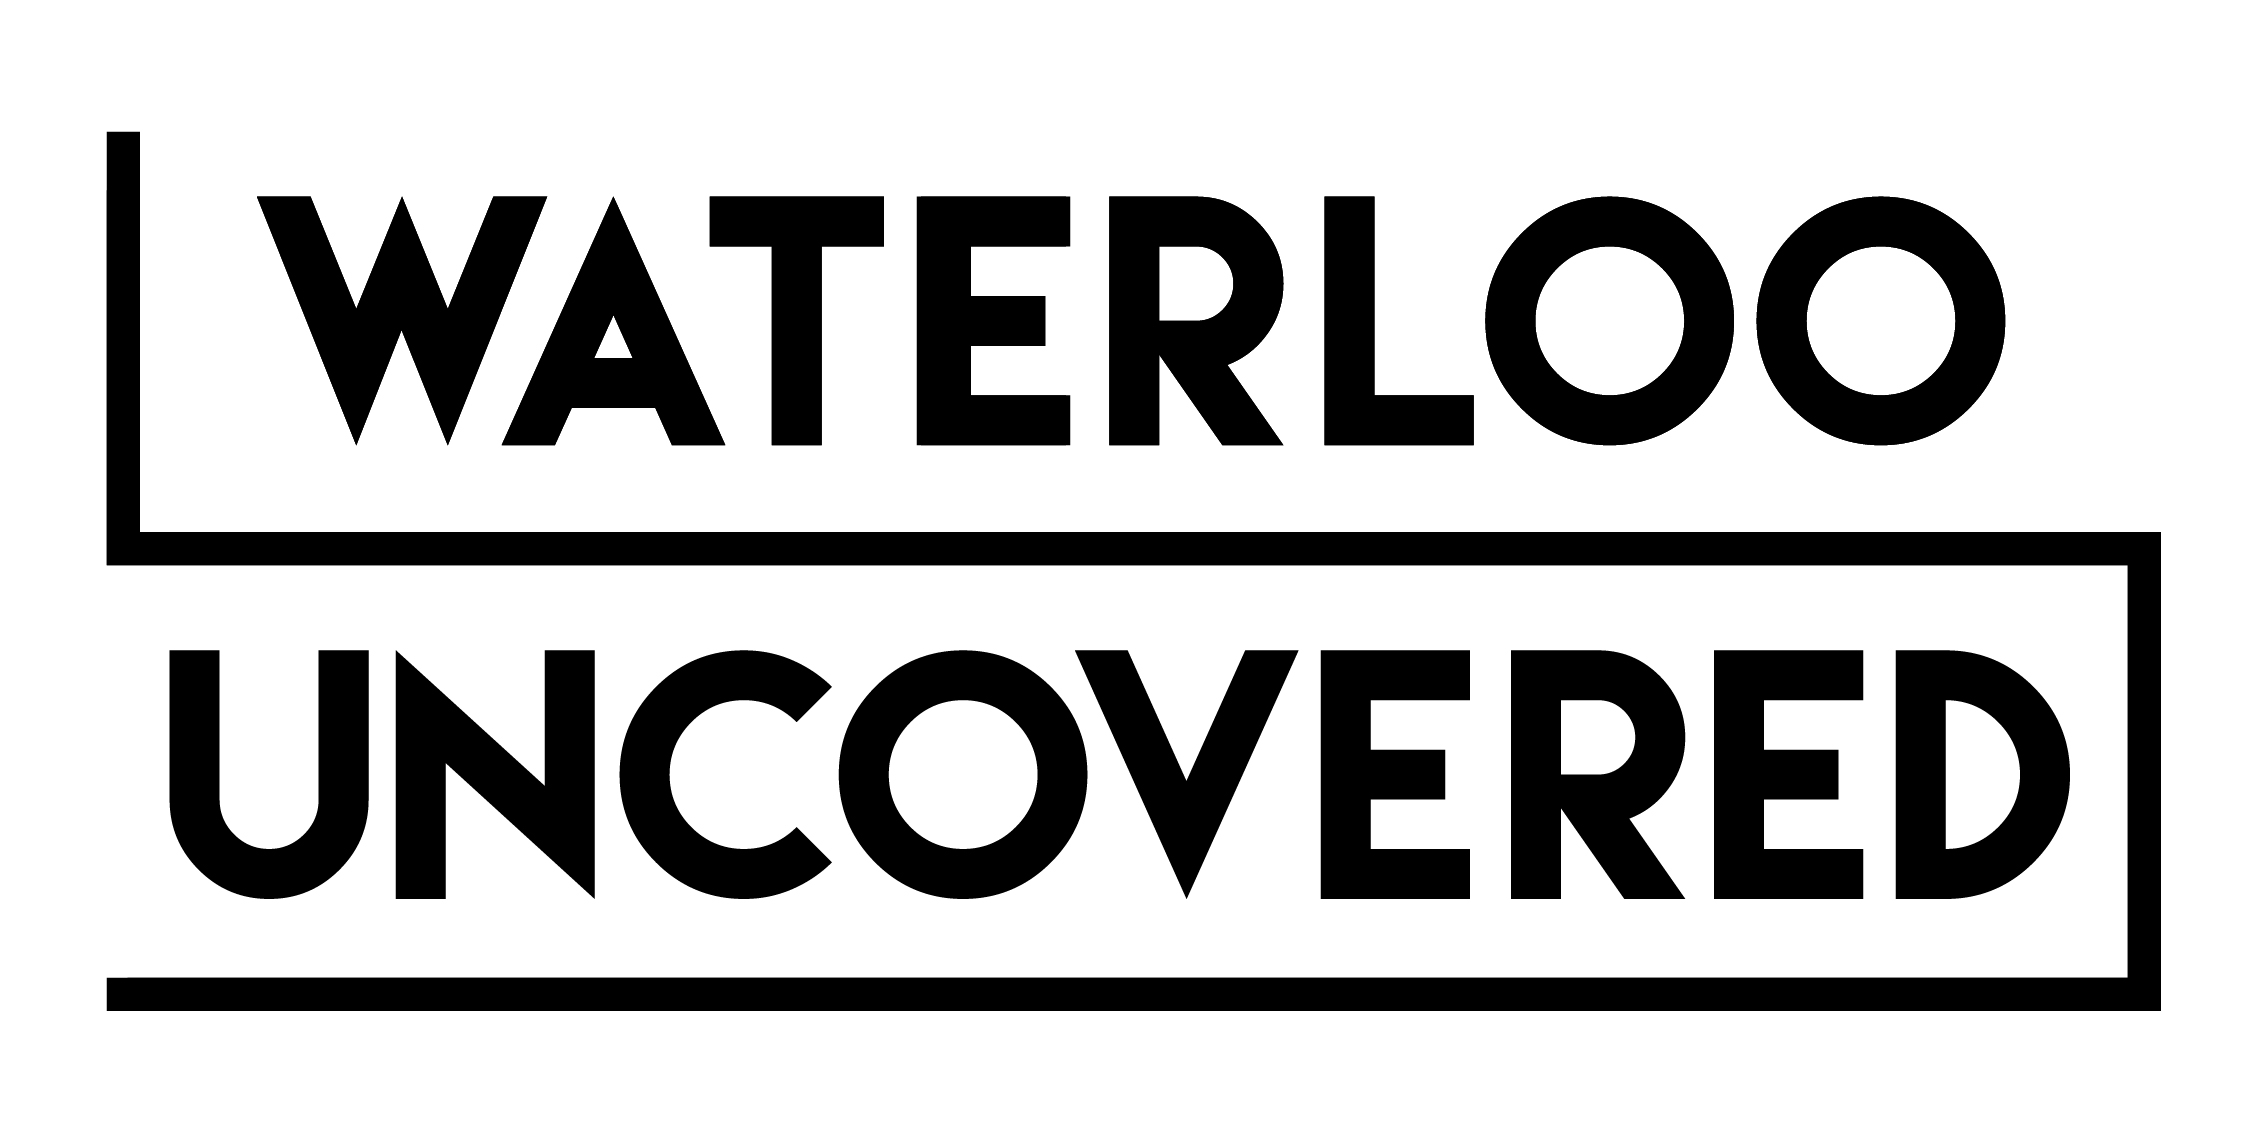 Waterloo Uncovered logo